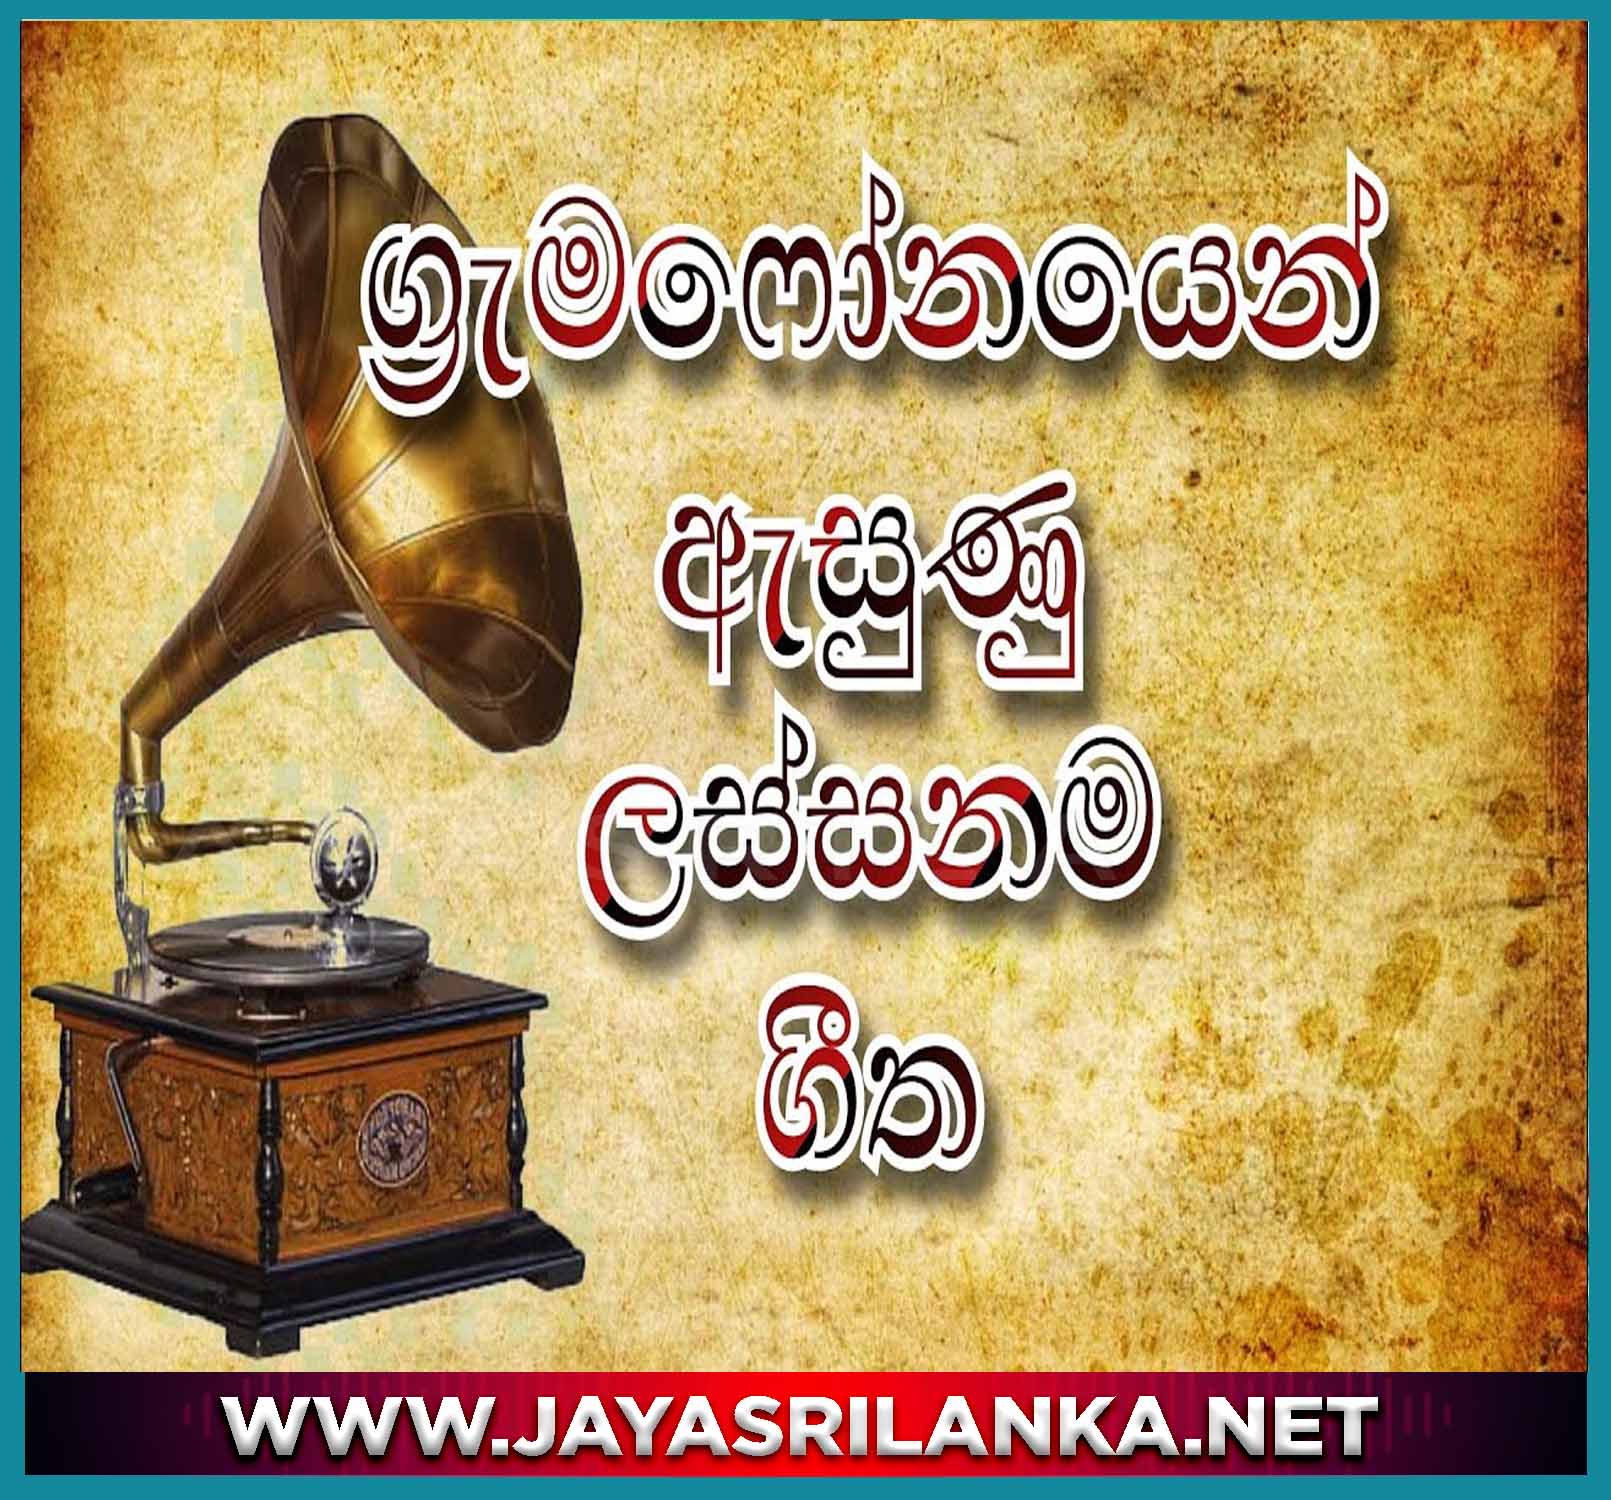 Aa Chandaniya Paya - Gramophone Songs mp3 Image